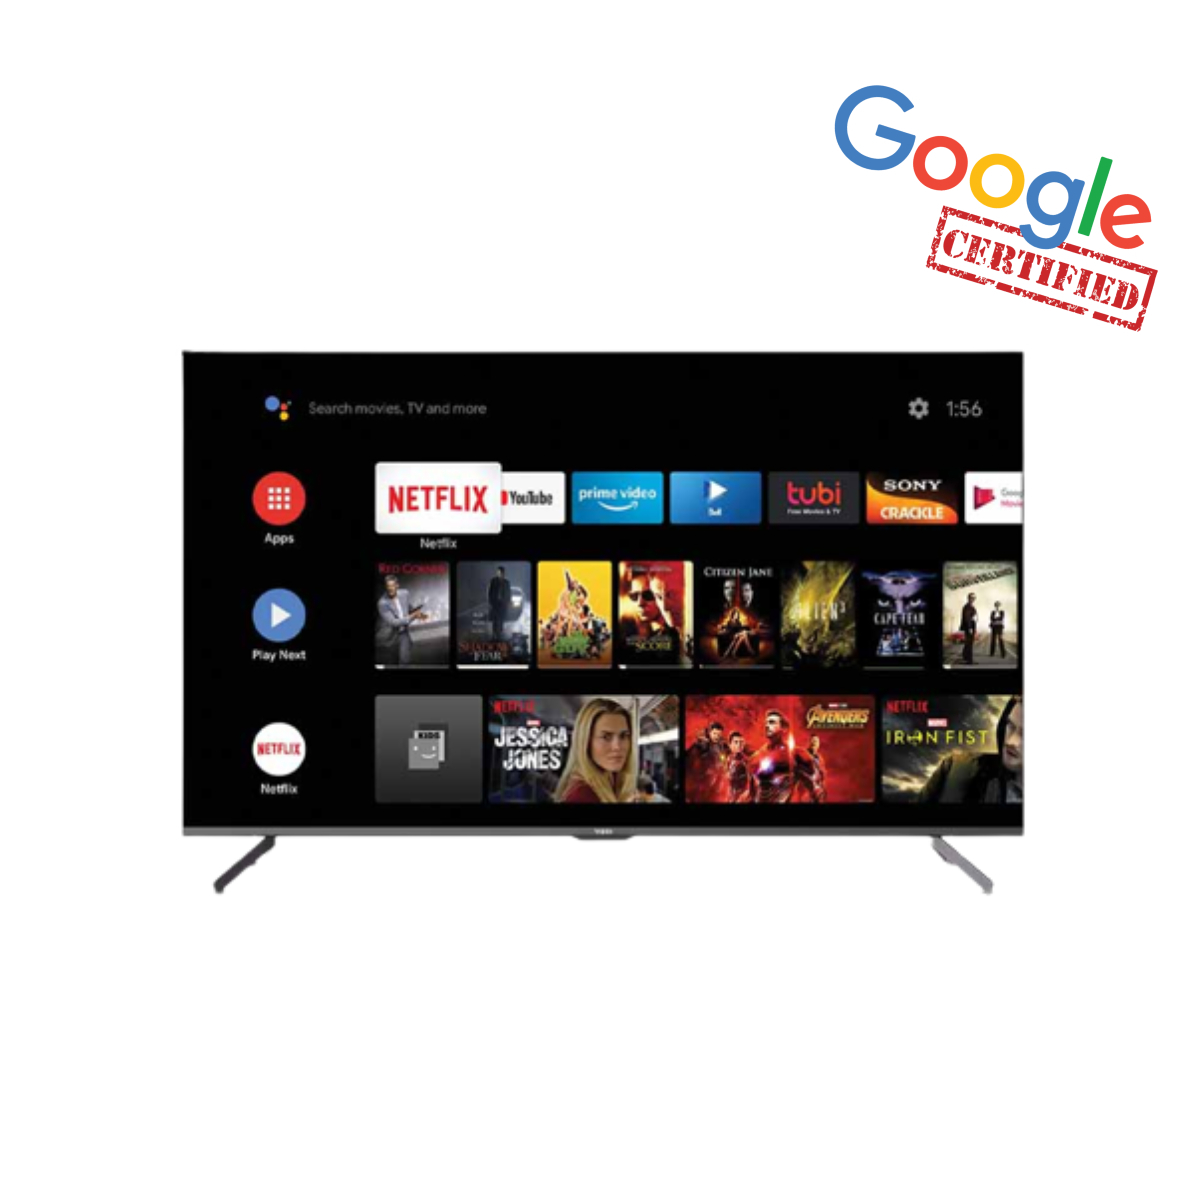 Television Smart TV VISION 55" TV Google Android 4K G3S